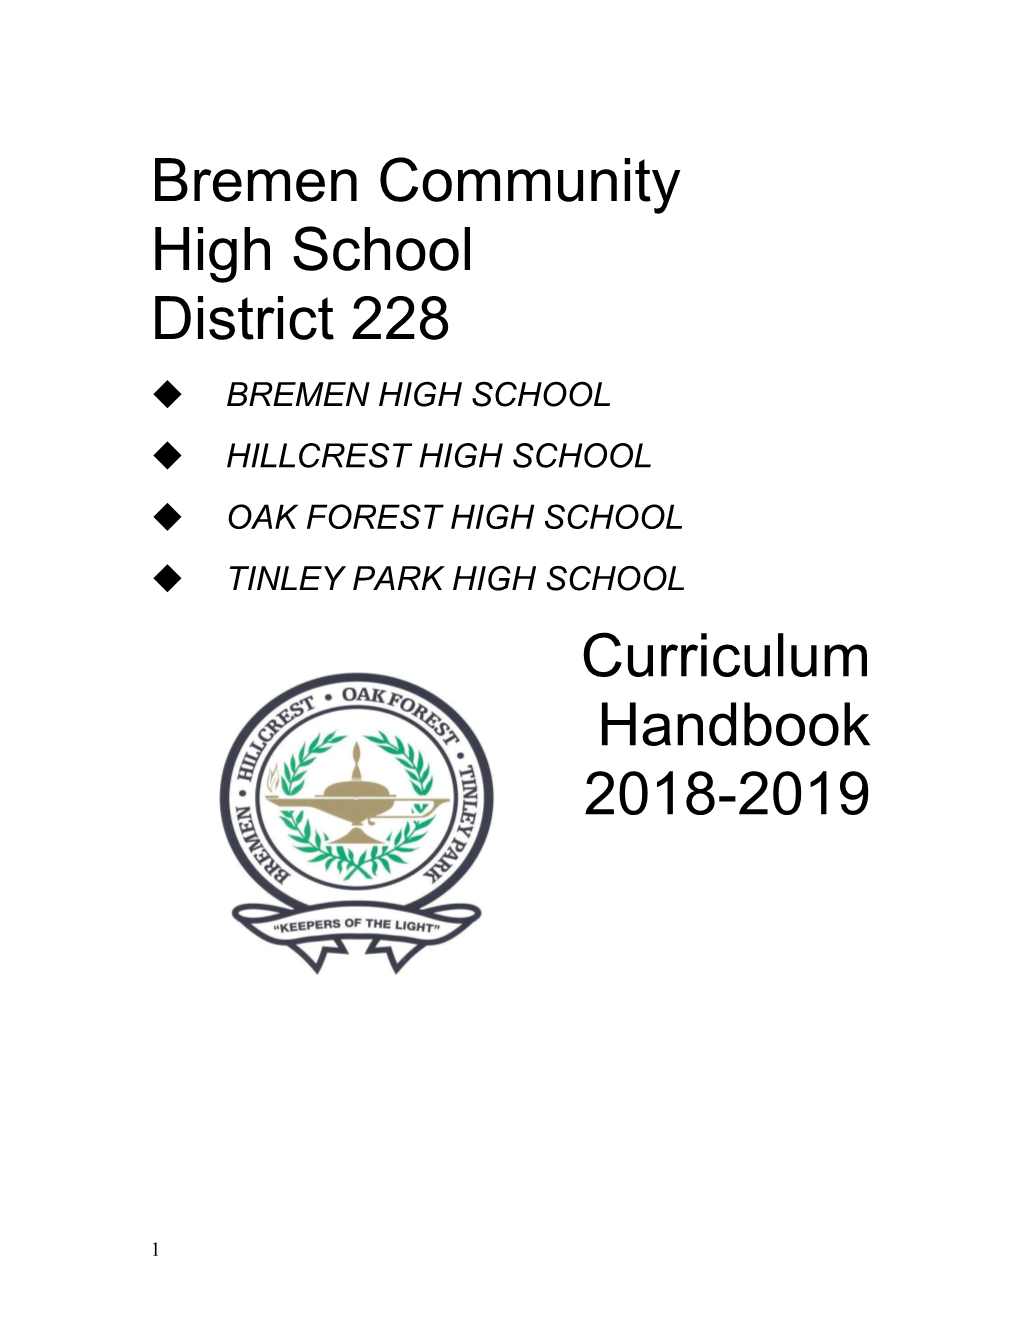 Bremen Community High School District 228 Curriculum Handbook